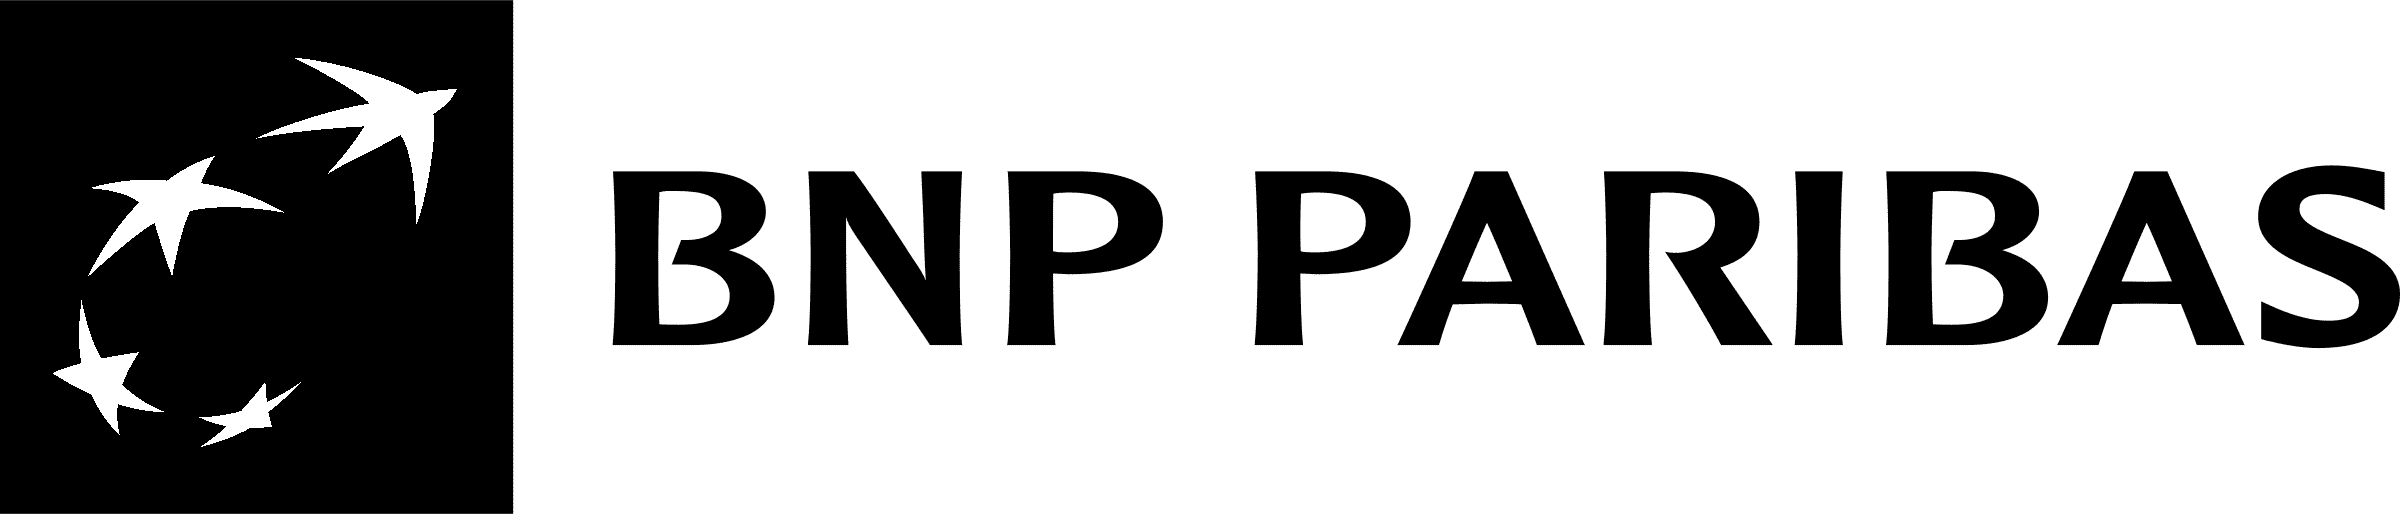 BNP Paribas Logo 2007